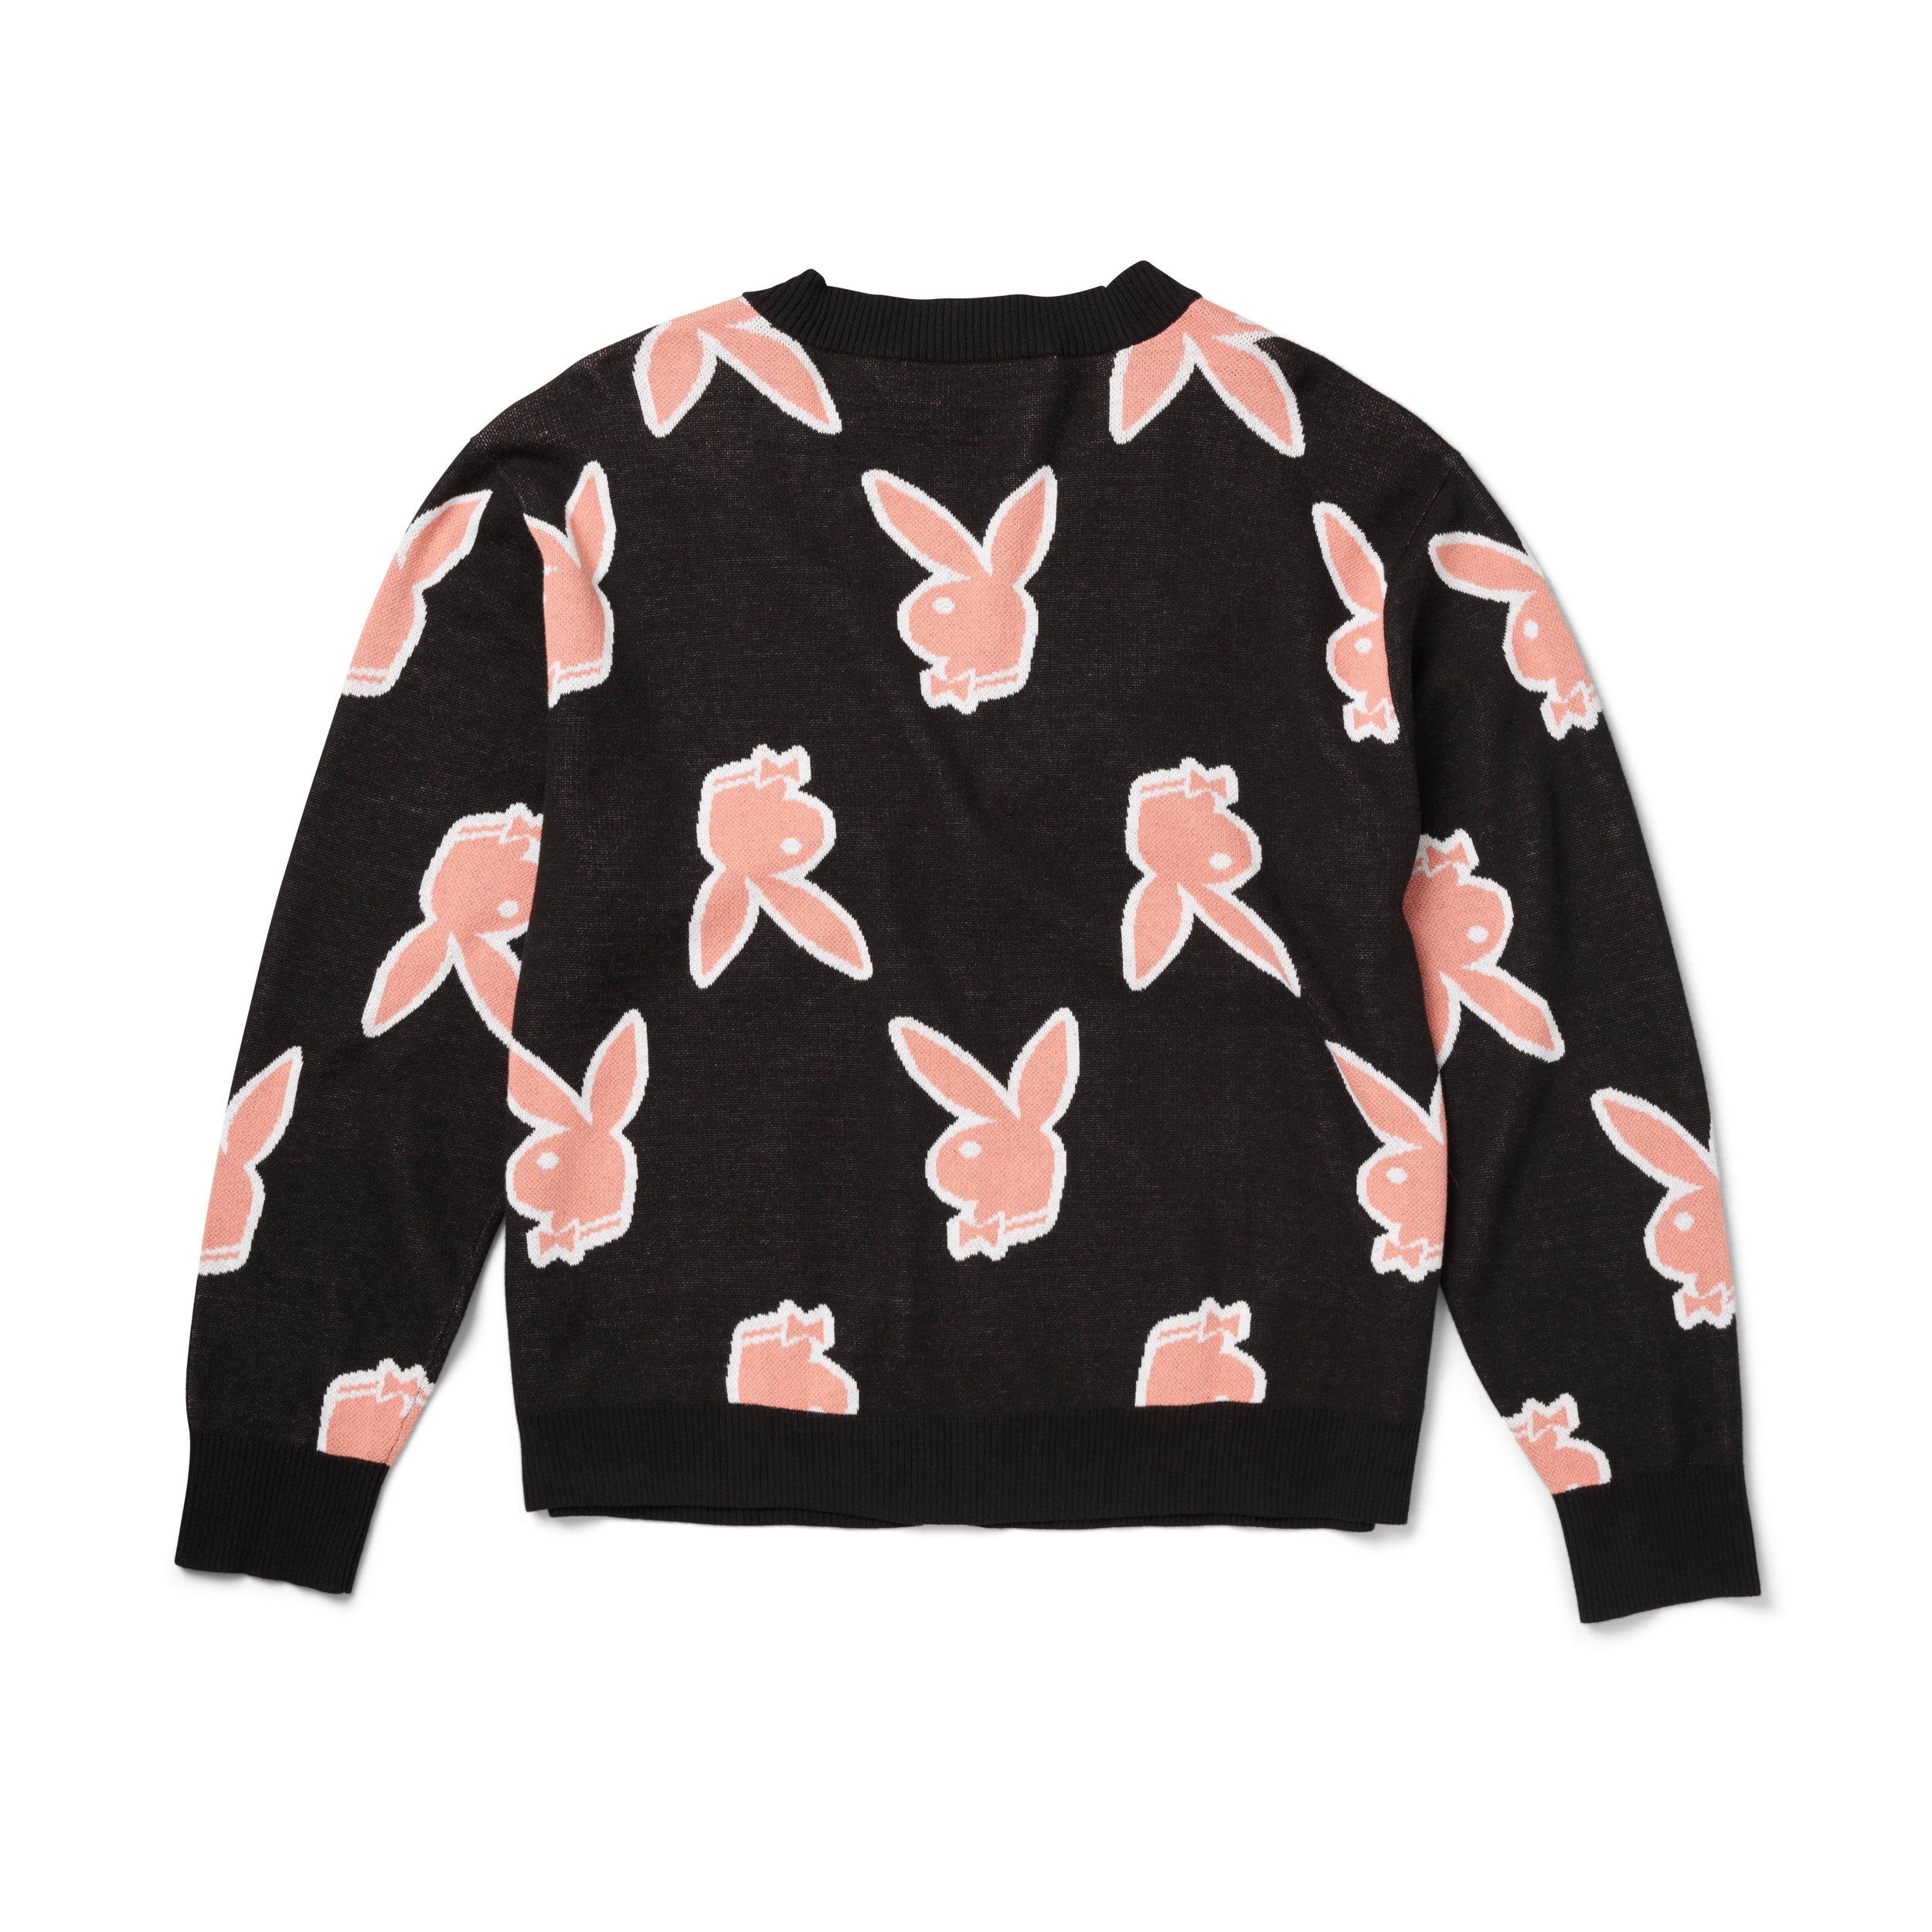 Rabbit jacket Louis Vuitton Black size M International in Rabbit